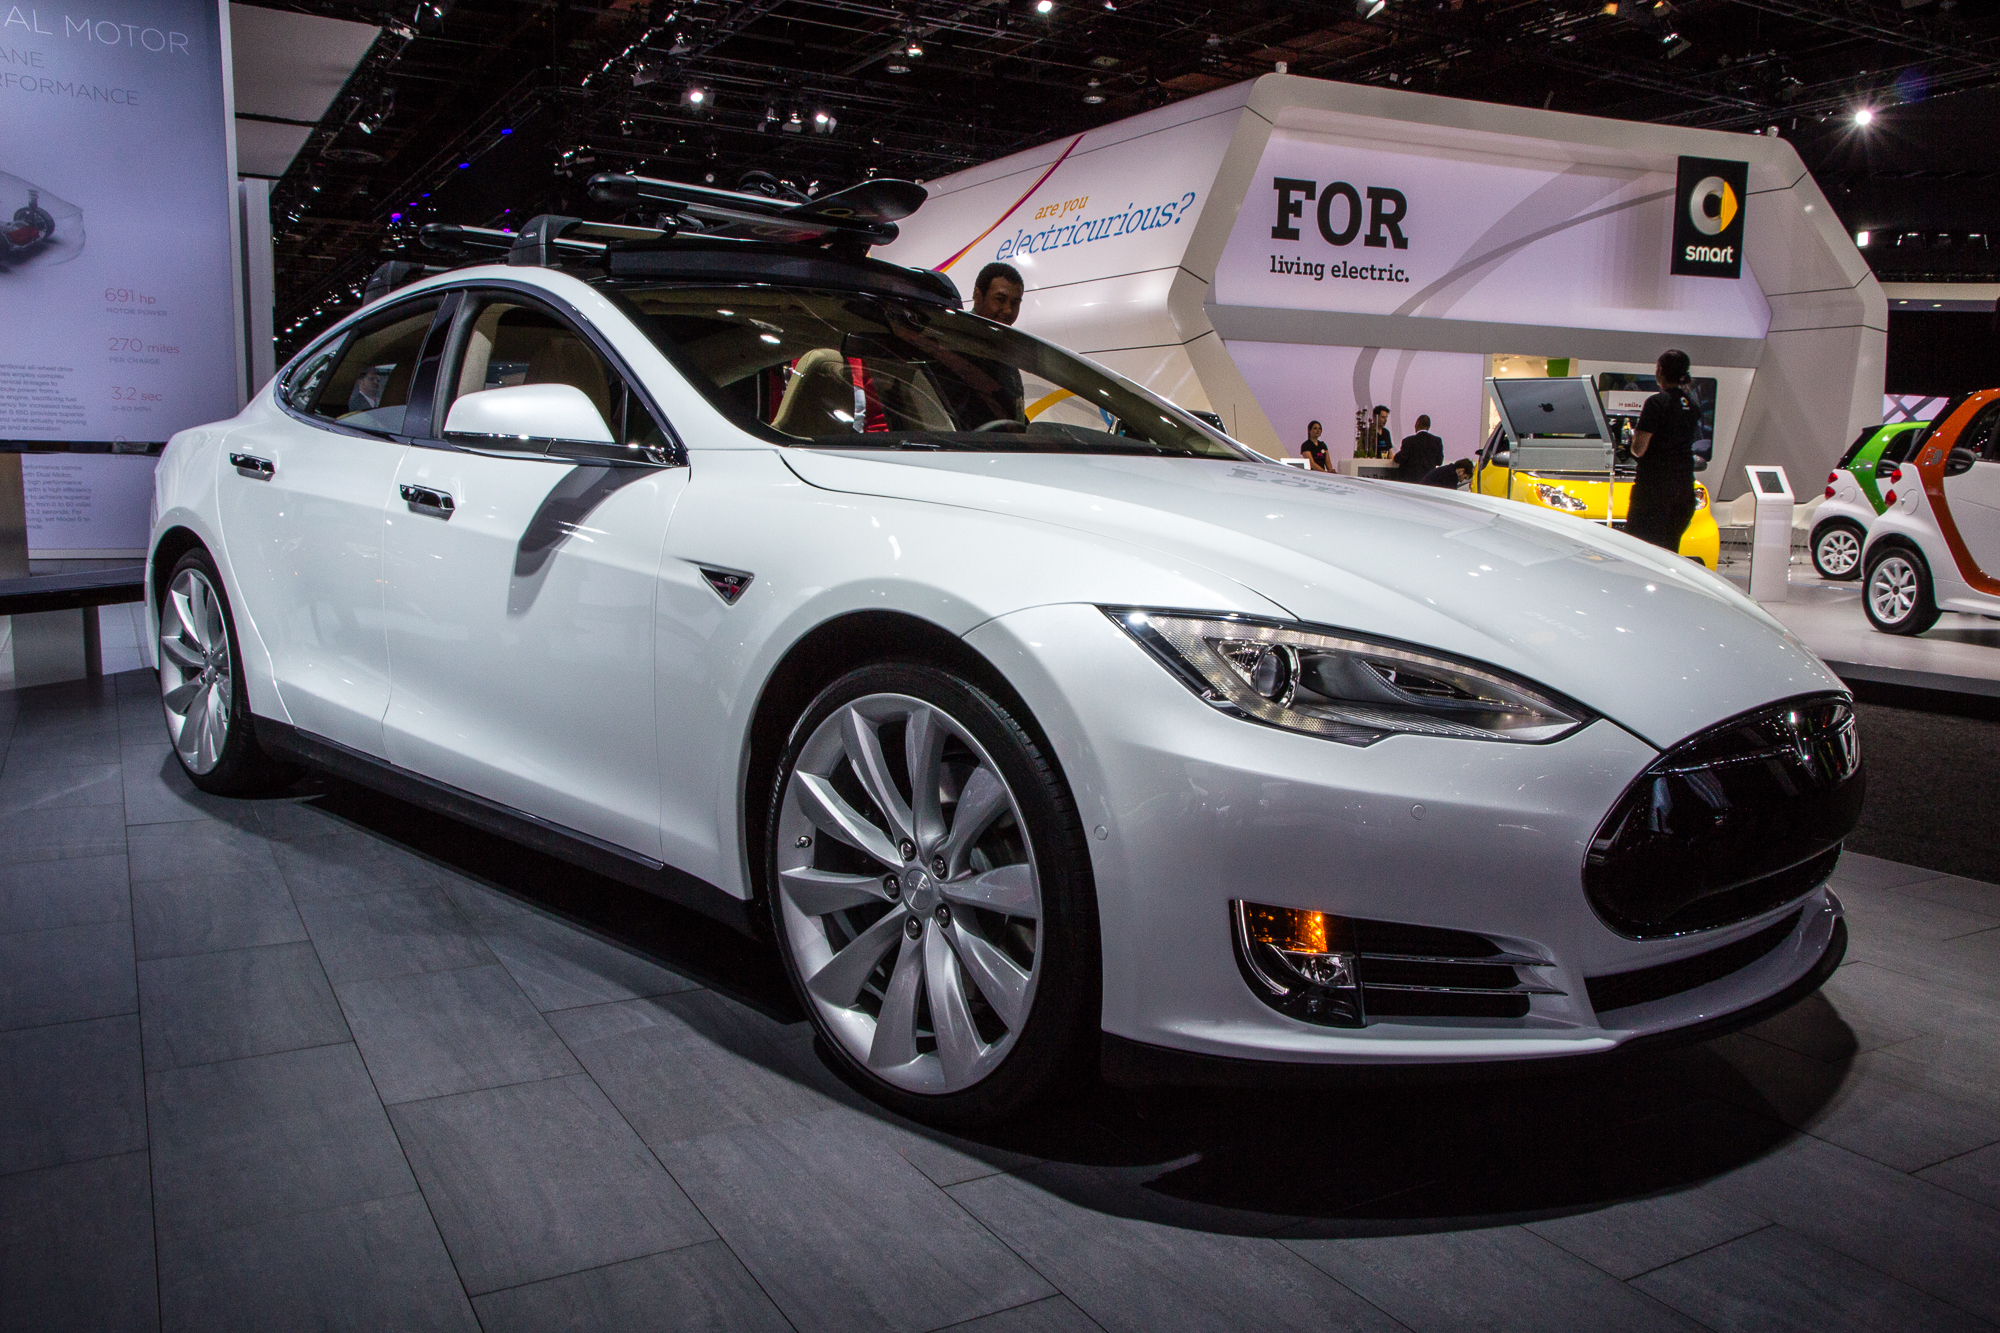 Hoofd verlegen Gematigd How Many Tesla Model S Electric Cars Have Been Built So Far?